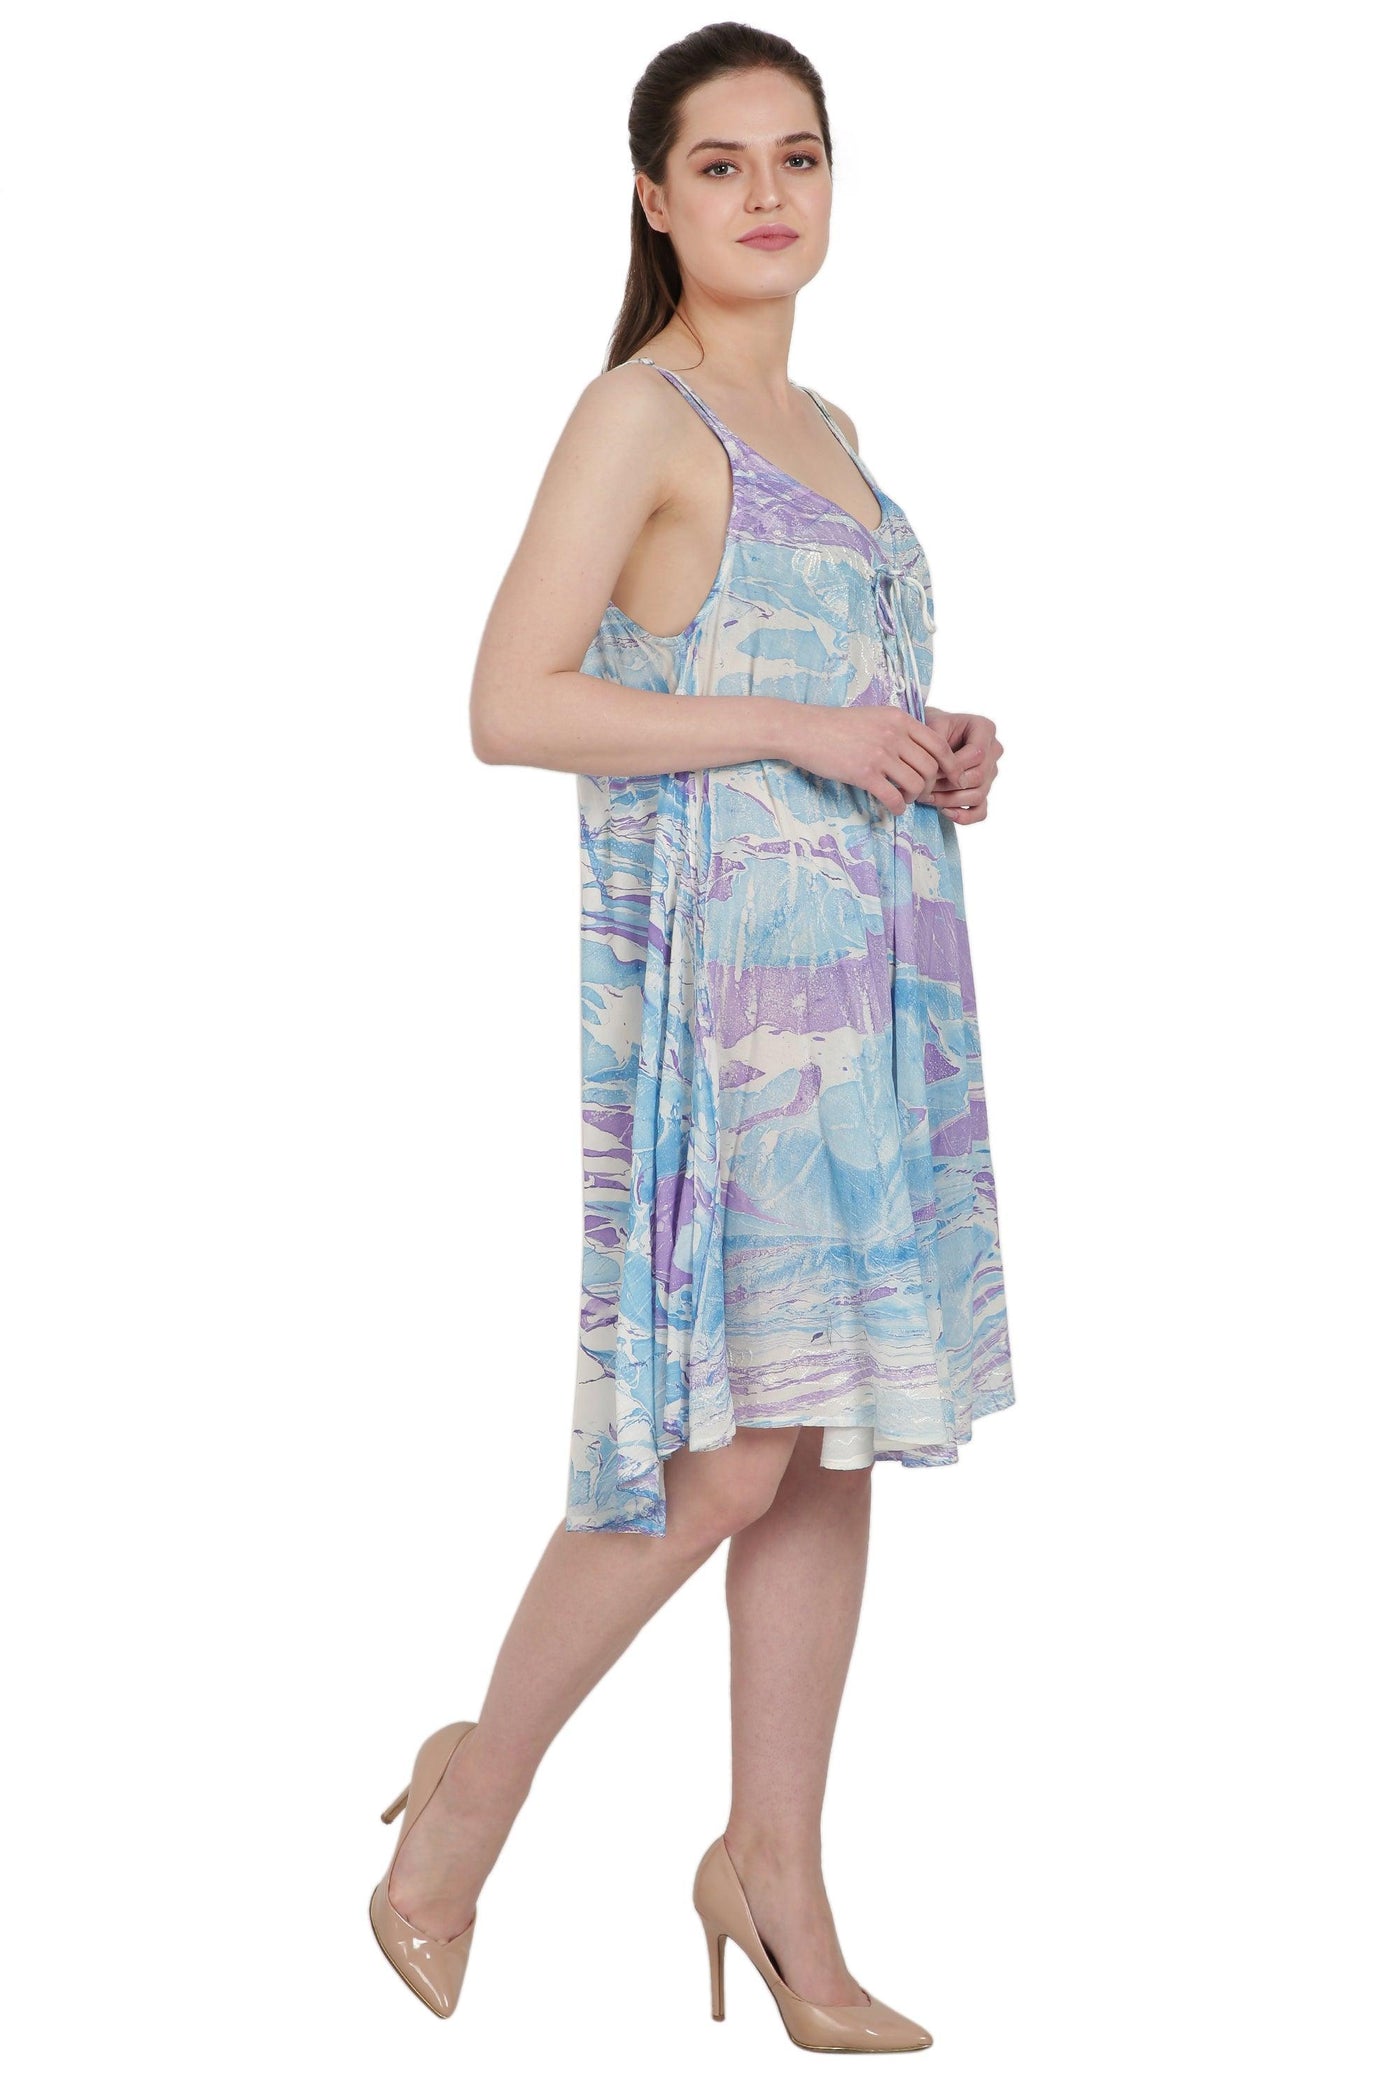 Marble Tie Dye Dress 422366  - Advance Apparels Inc